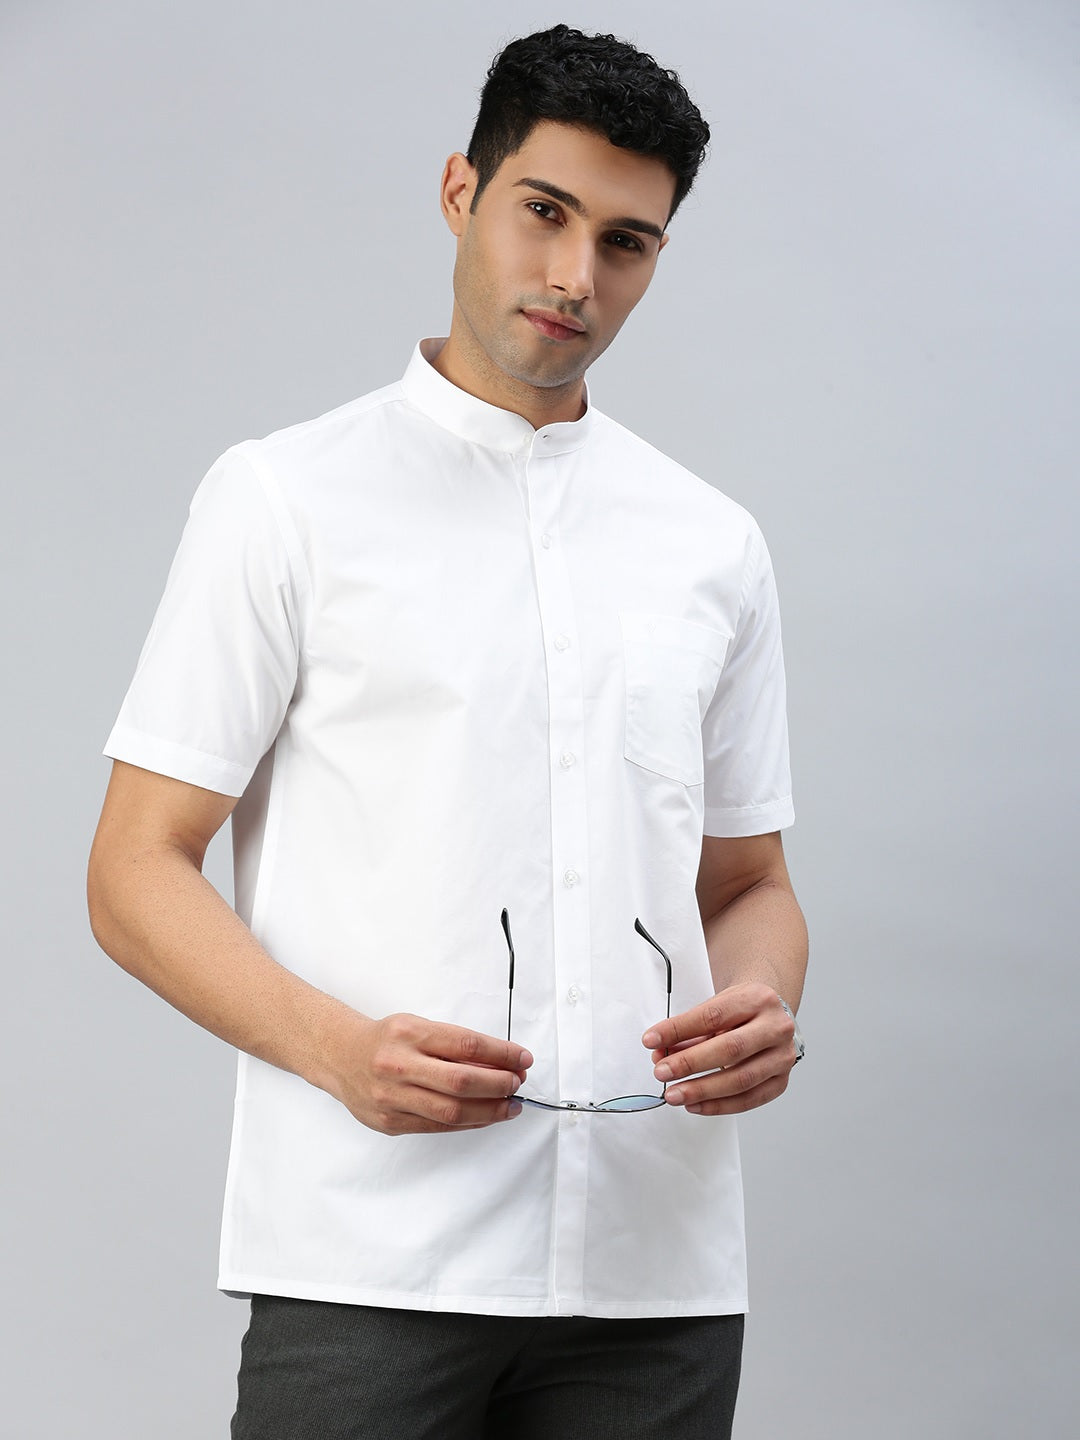 Mens Grand Look 100% Cotton Chinese Collar White Shirt